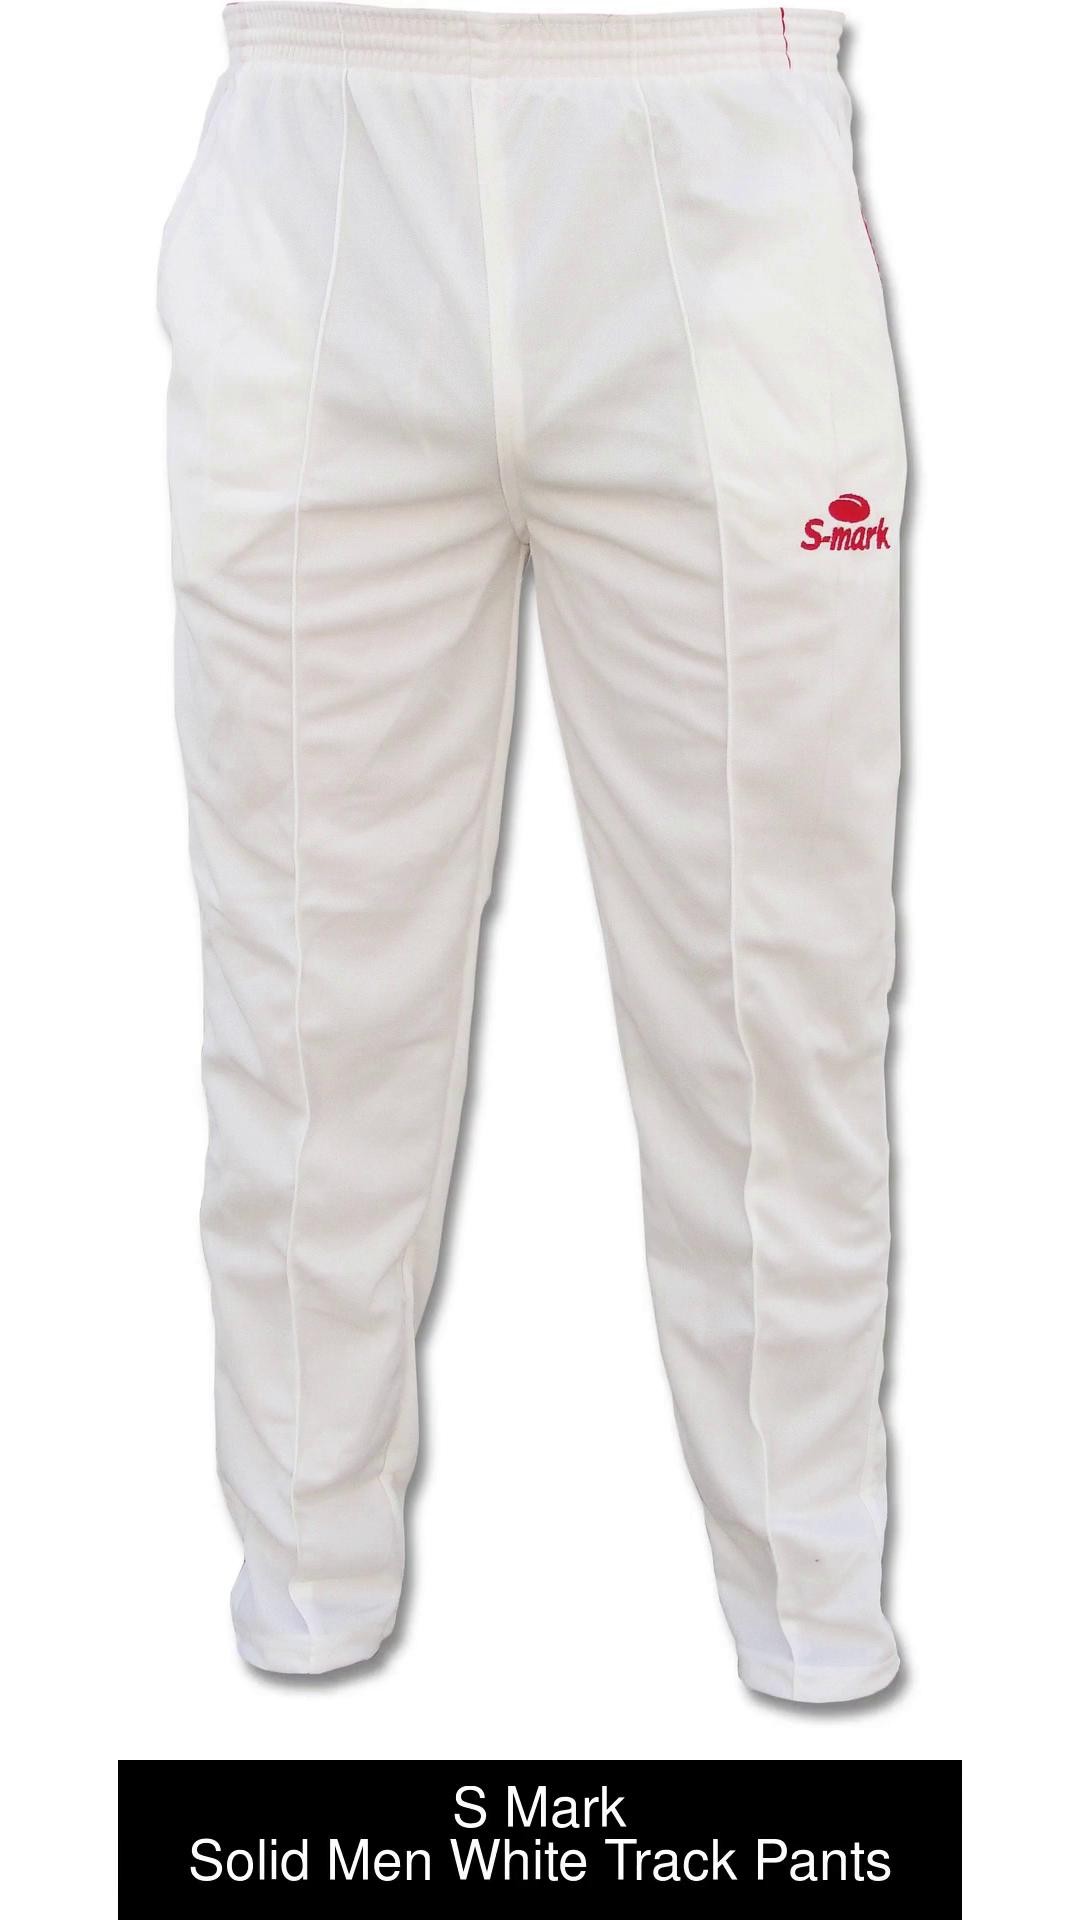 Winduce Iconic Cricket Trousers